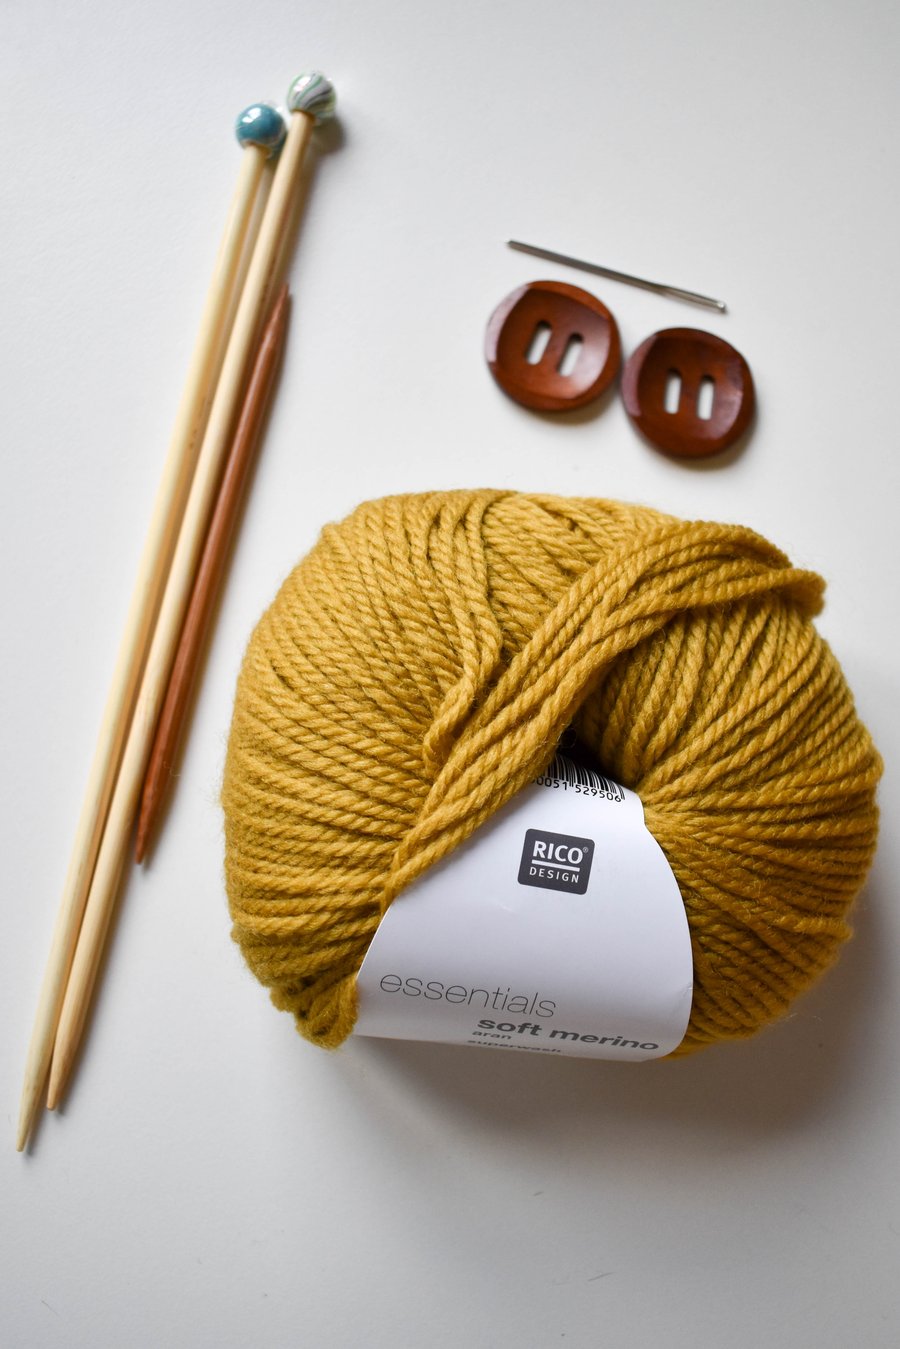 Triple braid headband kit - Knitting, crafts, handmade